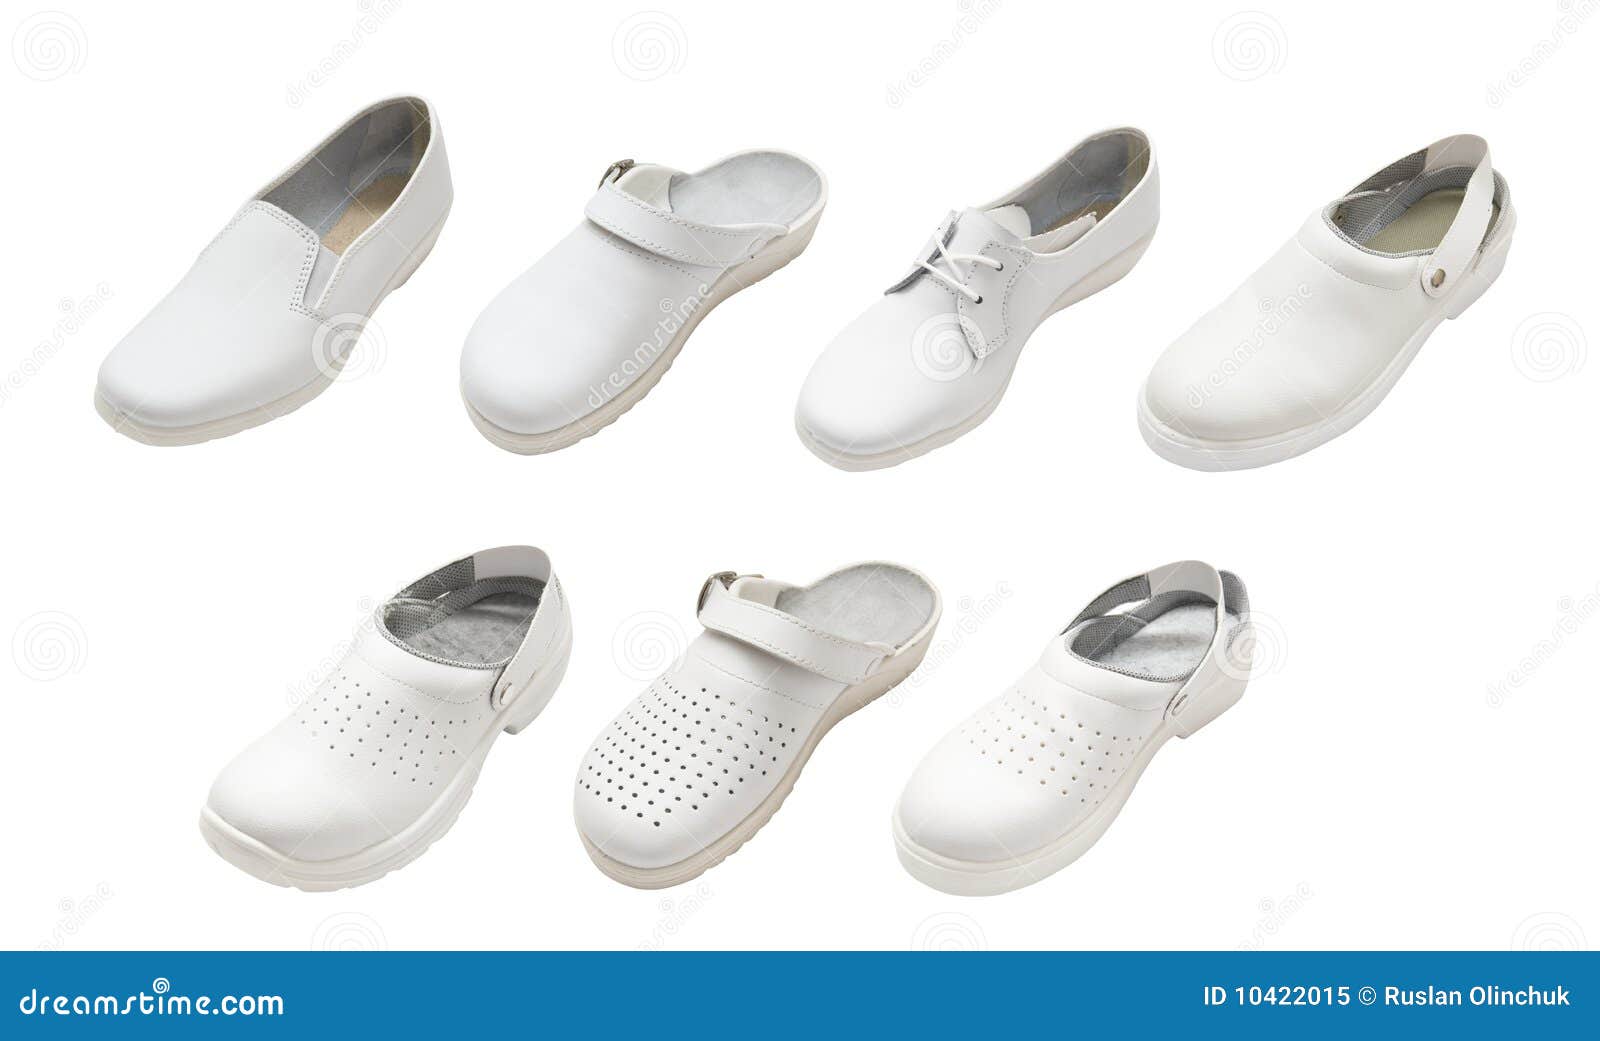 Orthopedic Medical Shoes and Slippers | Etkinmedikal.com-saigonsouth.com.vn